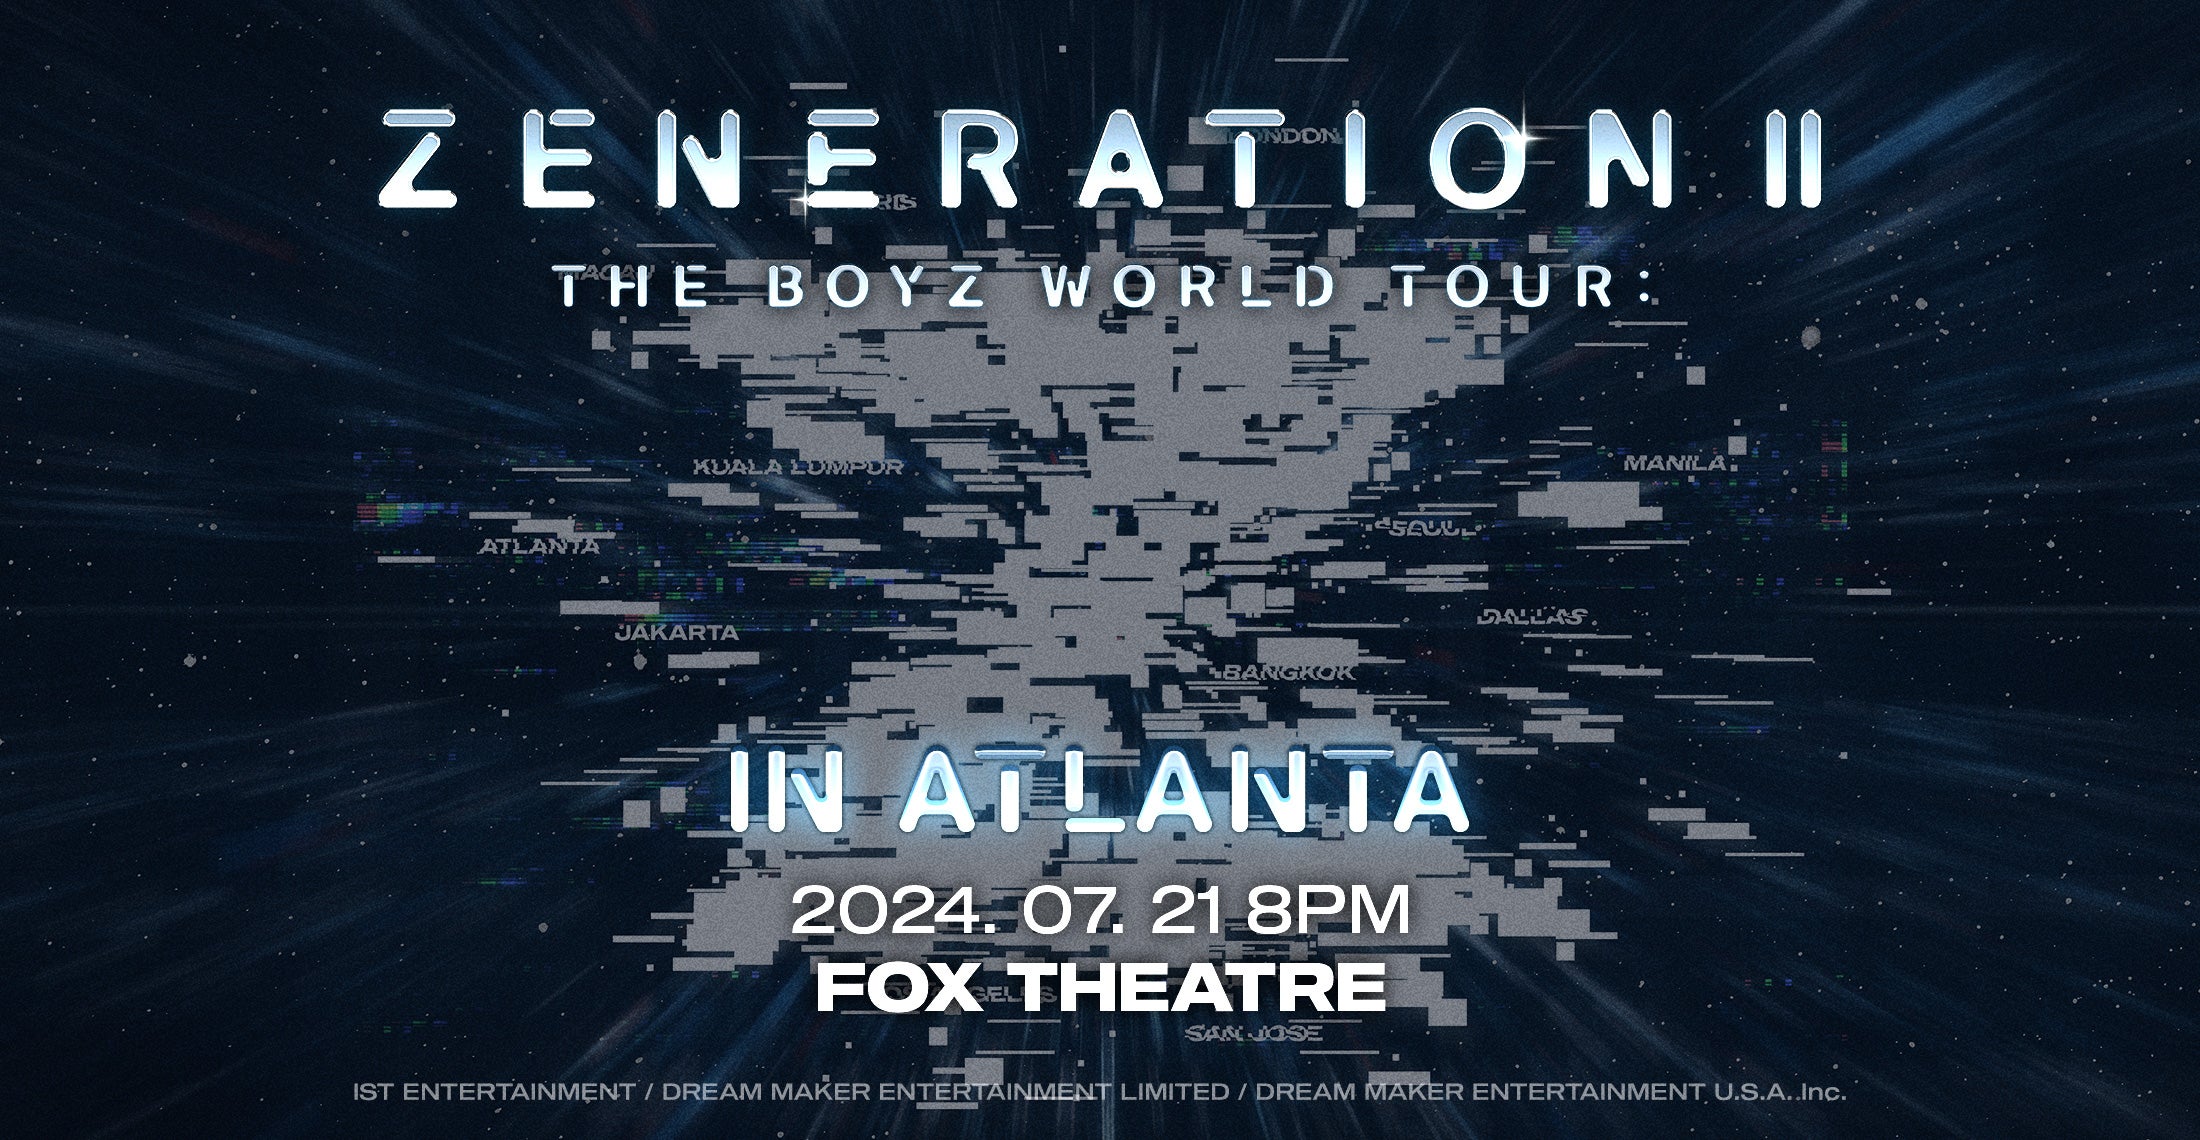 The Boyz World Tour: Zeneration II